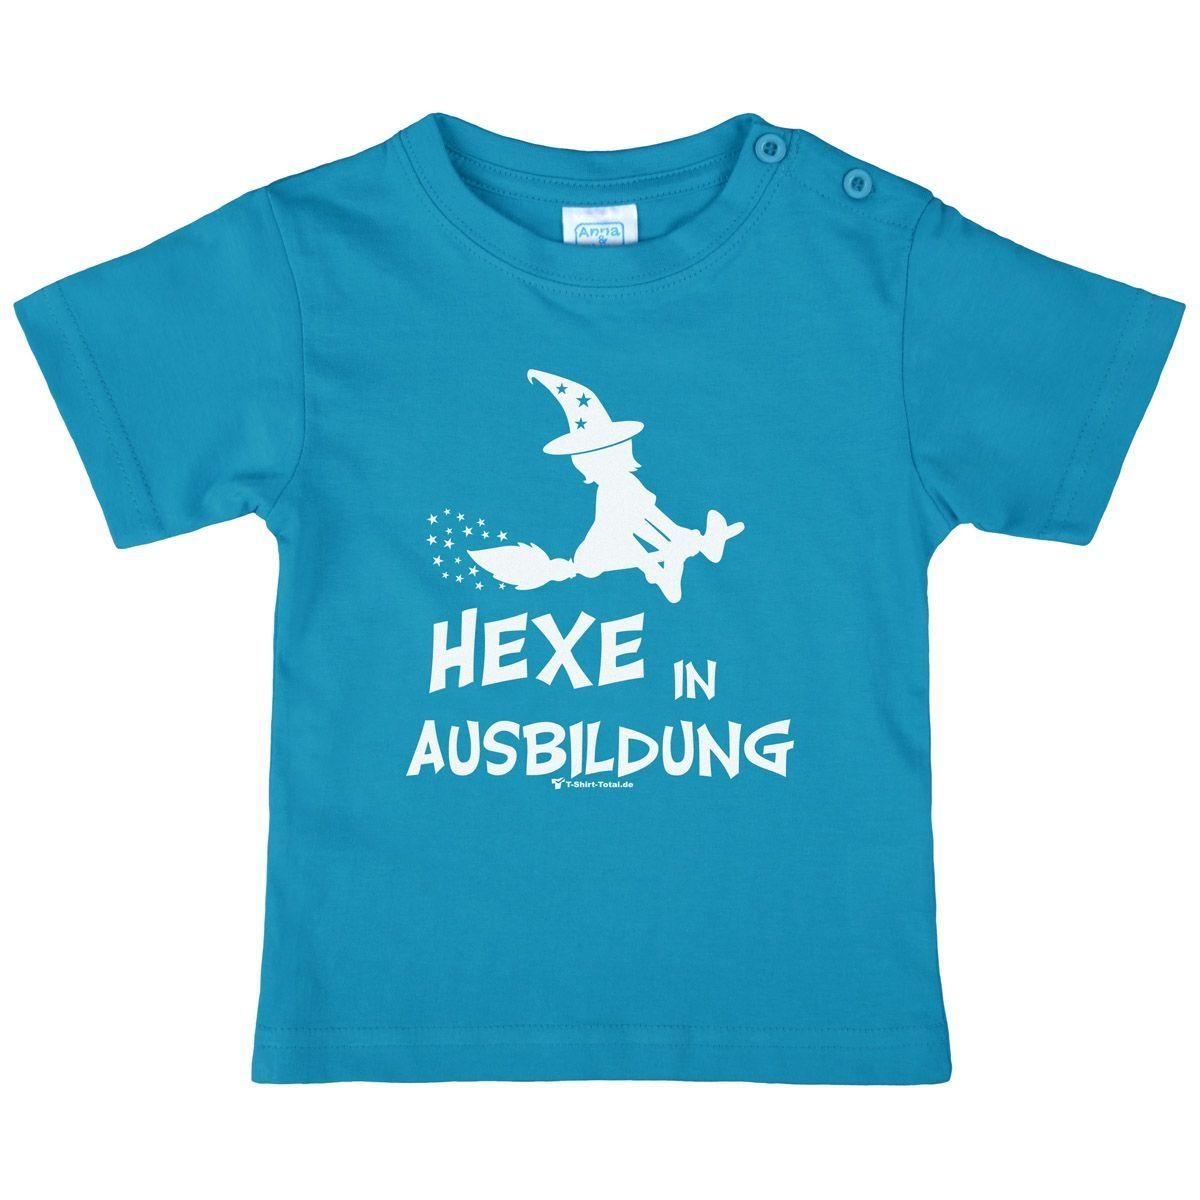 Hexe in Ausbildung Kinder T-Shirt türkis 80 / 86